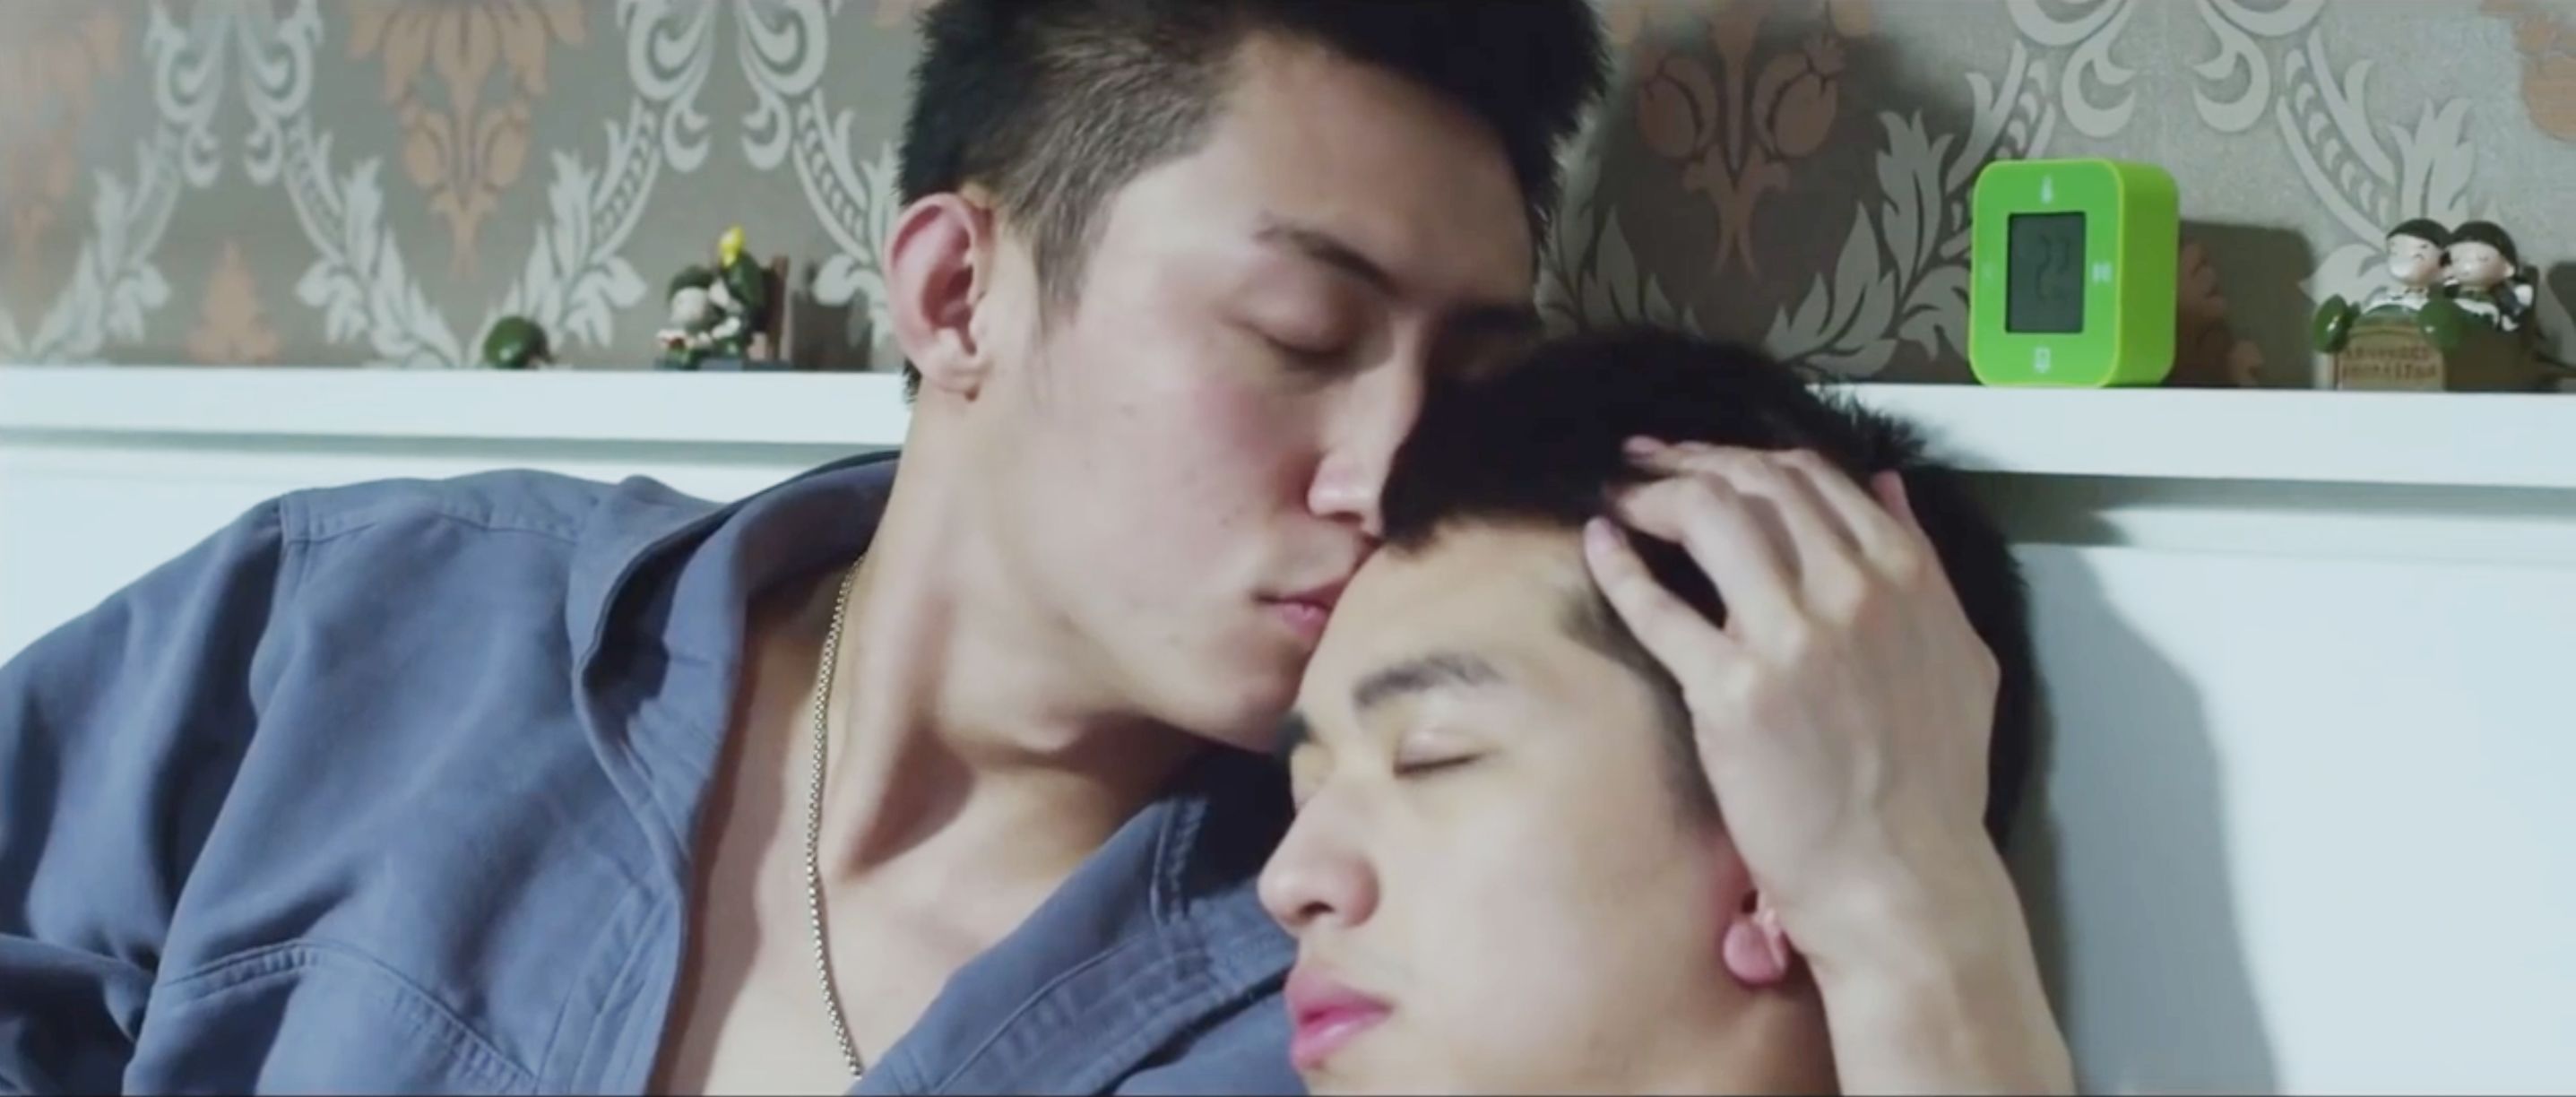 Aasroliyan Girl And Boy Sex - China bans same-sex romance from TV screens | CNN